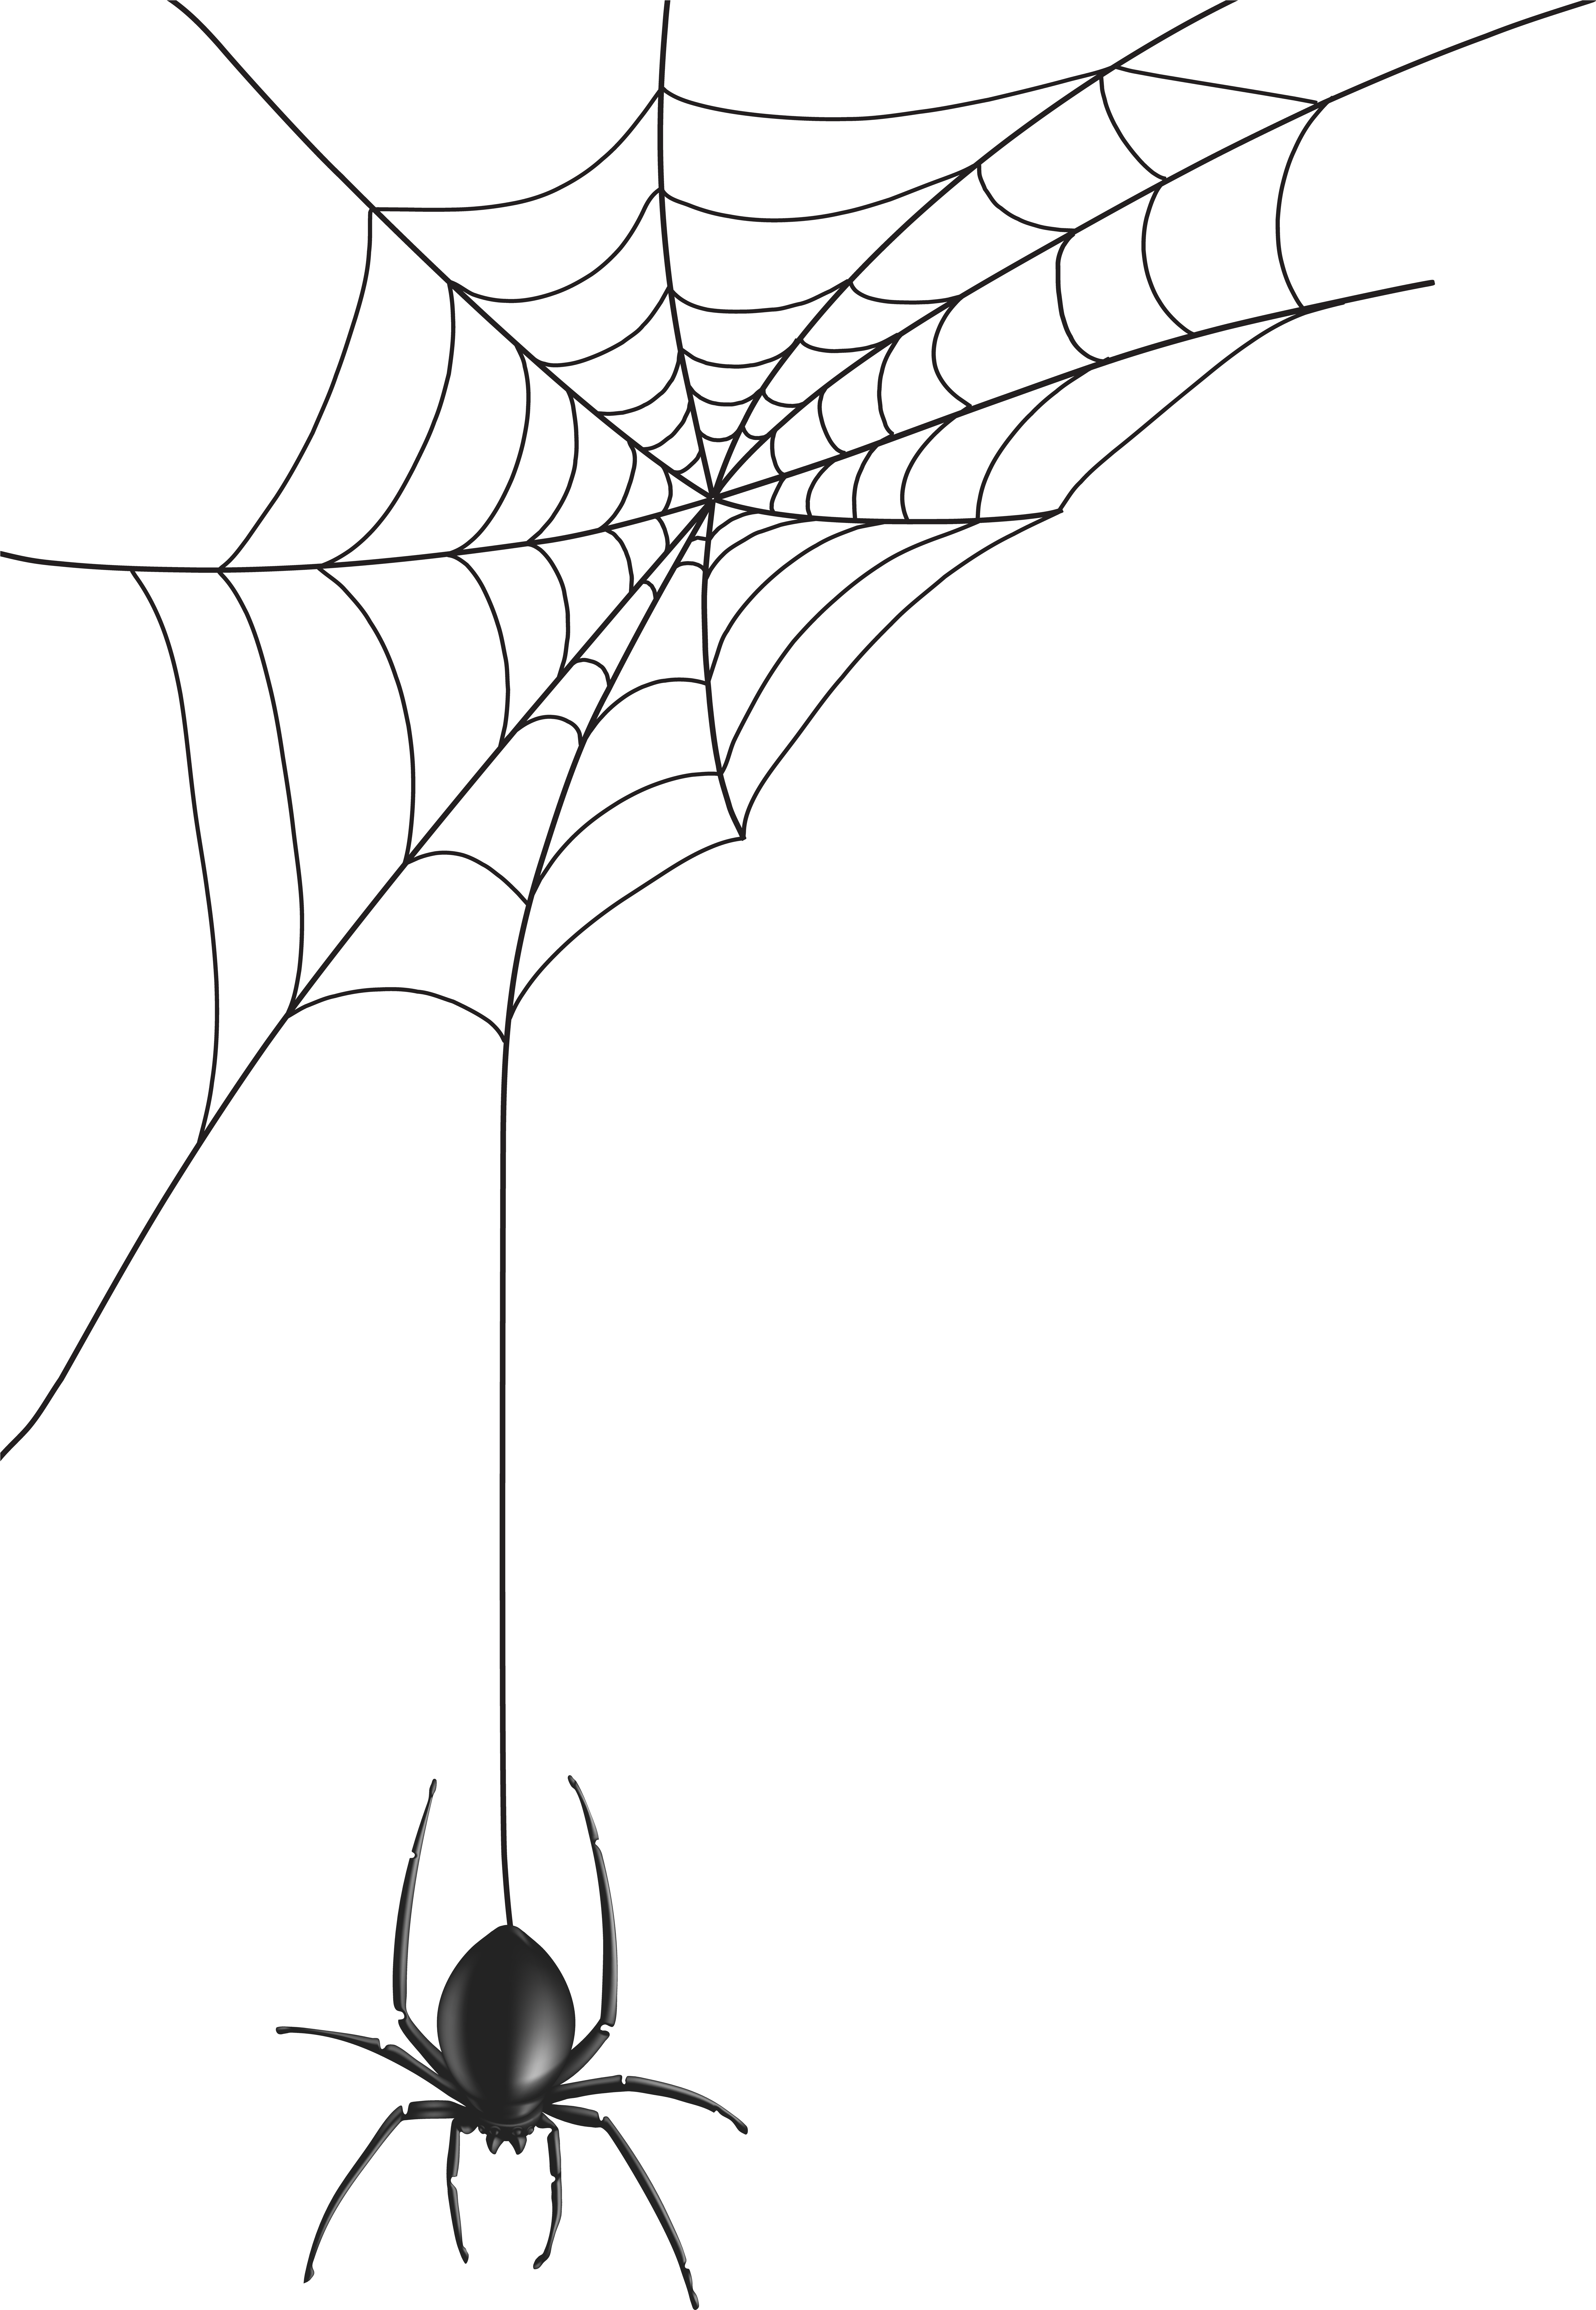 Spider Web Png Clip Art Image - Spider Web Png Clip Art Image (5491x8000)